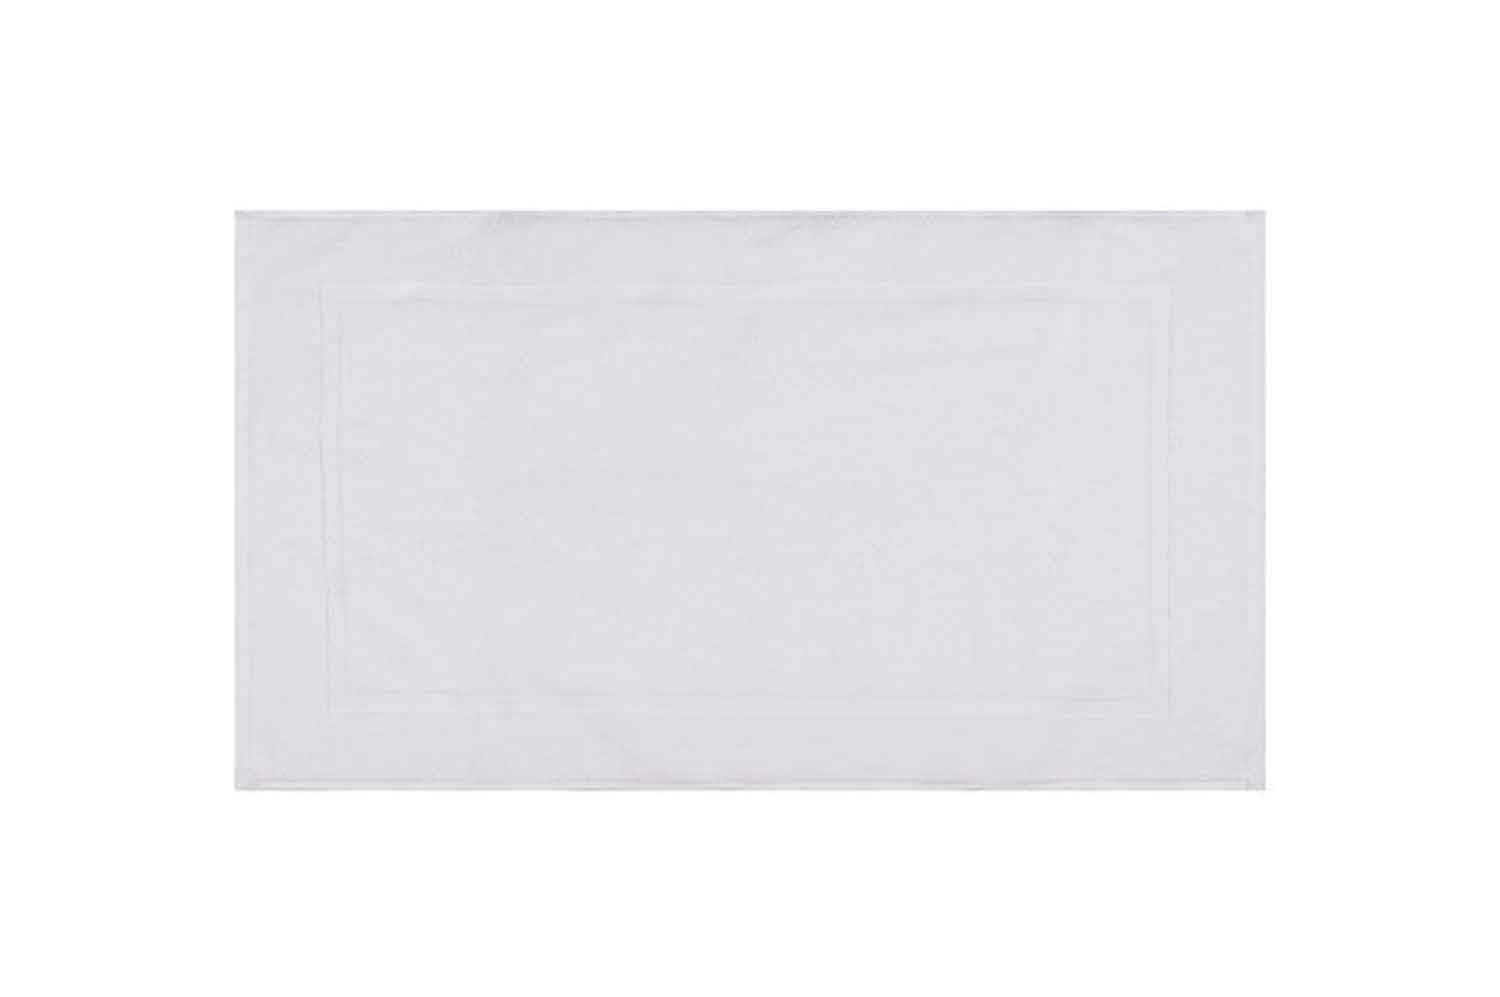 22x34 inch Marbella White Hotel Towel | Tub Mat with Vertical Bar Accent Dobby - American Dawn